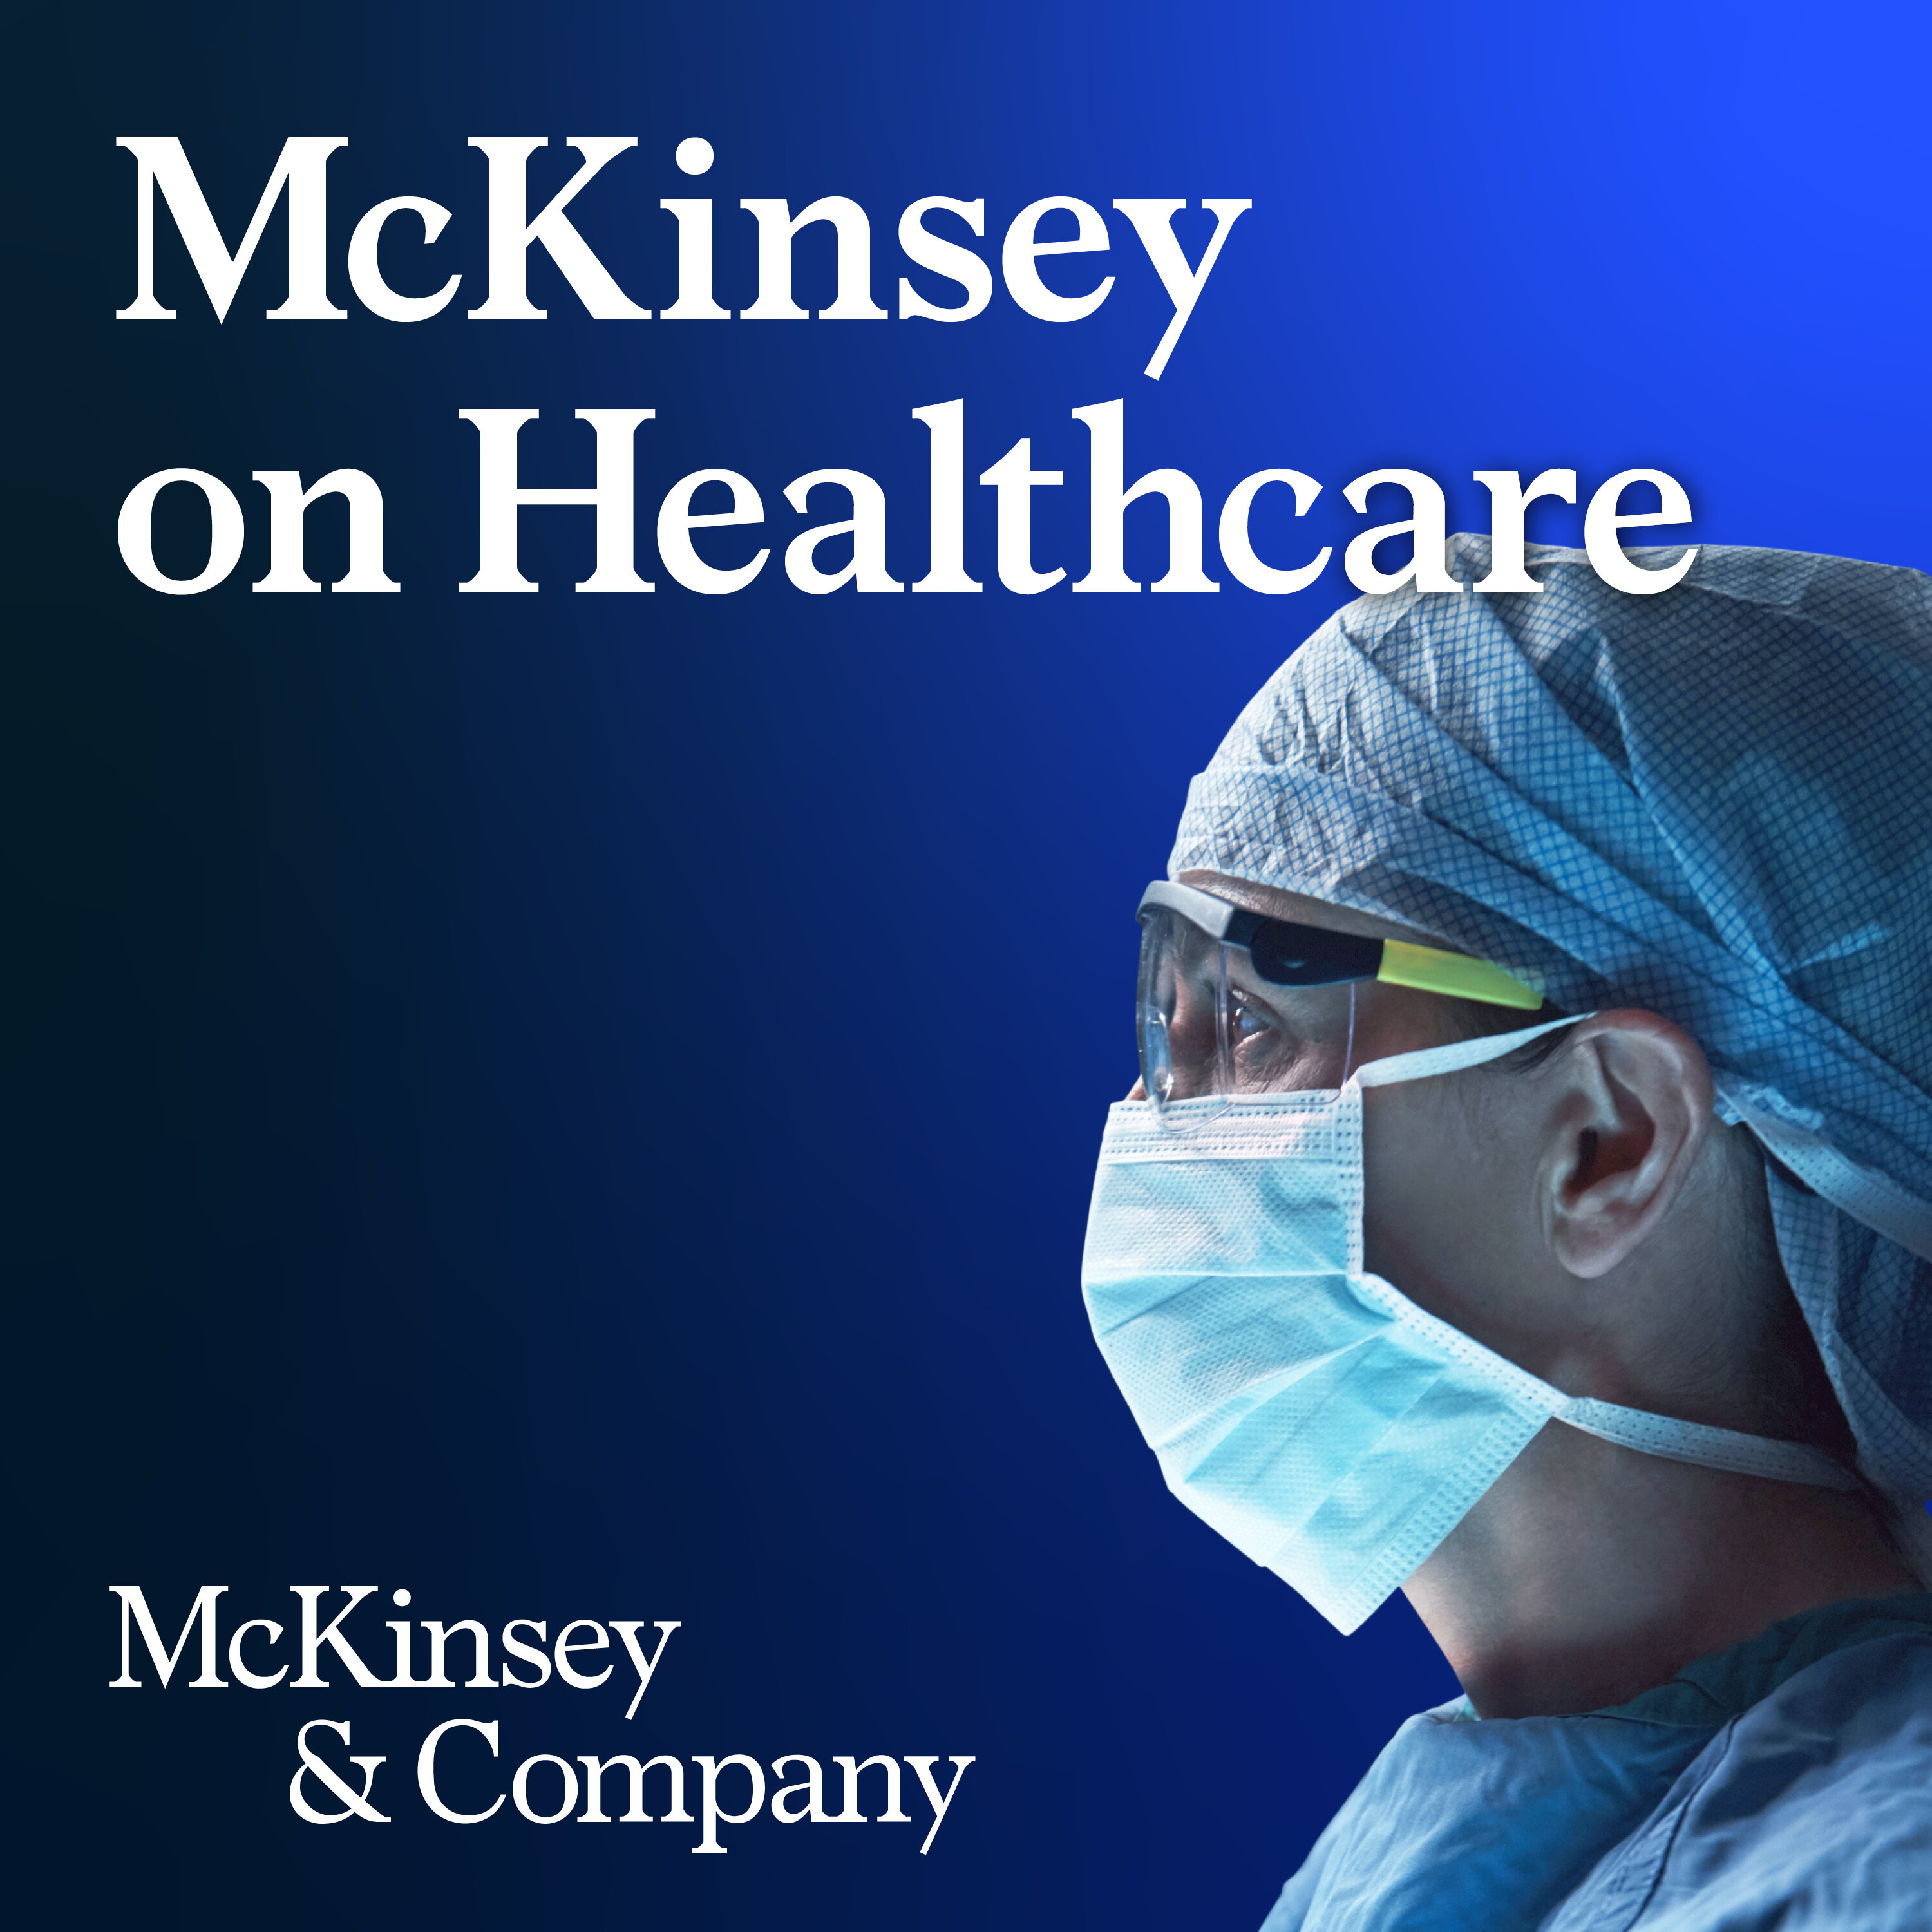 McKinsey on Healthcare